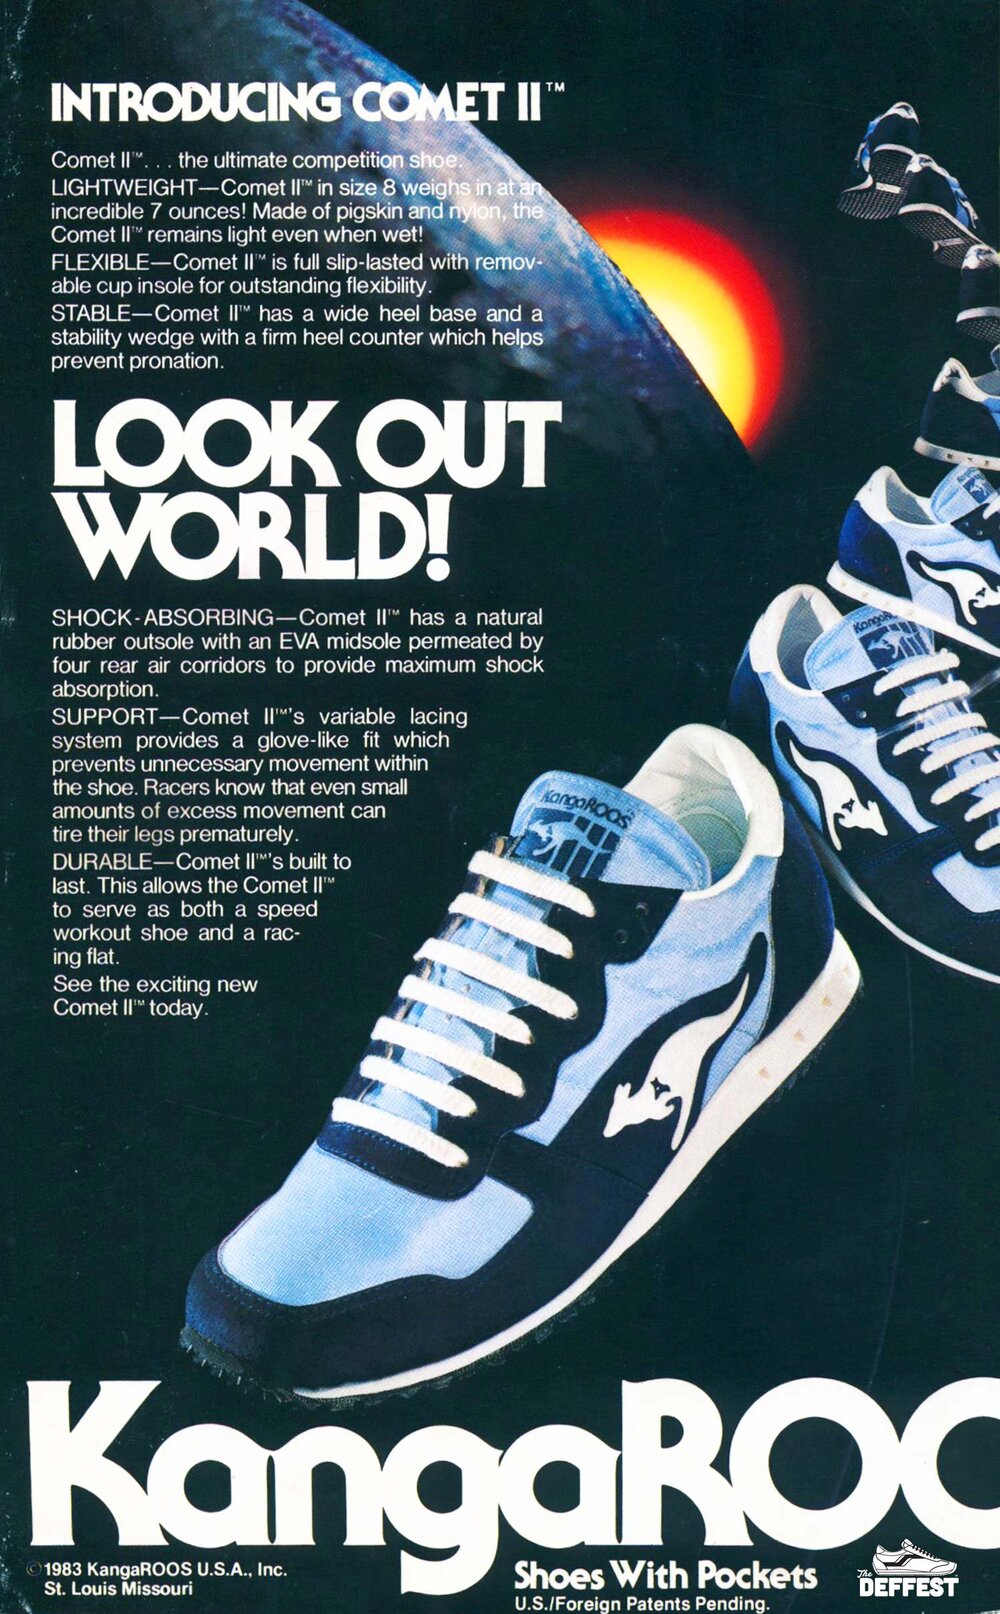 Kangaroos sneakers — The Deffest®. A vintage and retro sneaker — Vintage Ads